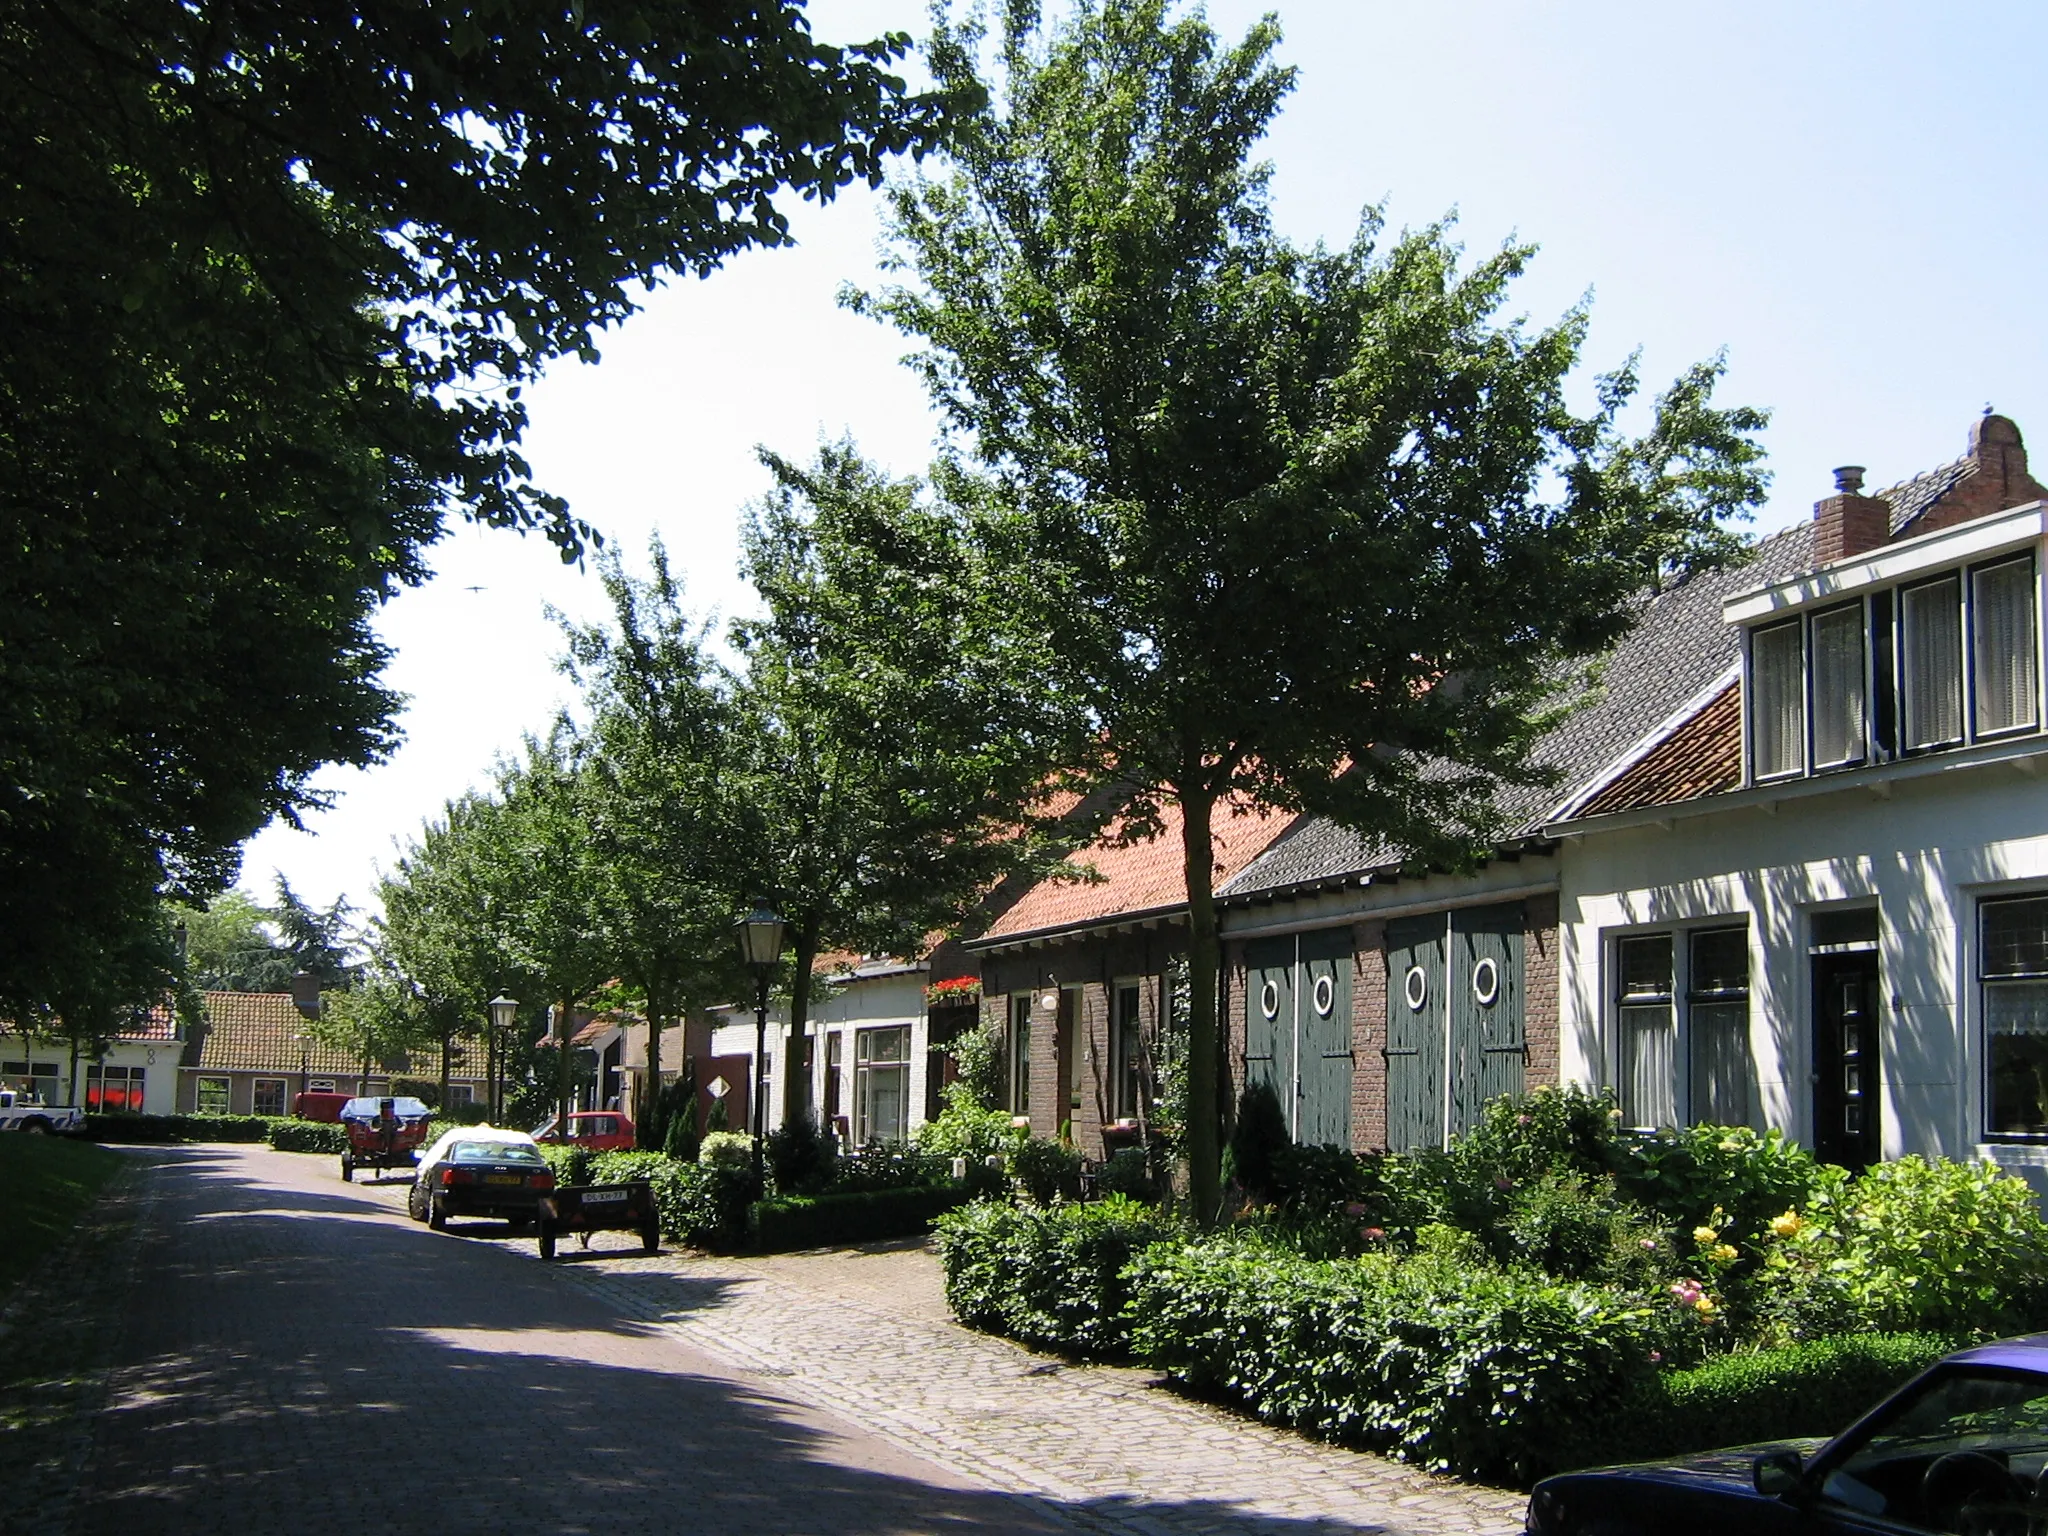 Photo showing: Bossele: Uusjes lanks 't plein. Borssele, gemeente Borsele: Huisjes langs het plein. Borssele, Borsele community, NL: Houses around the village square.